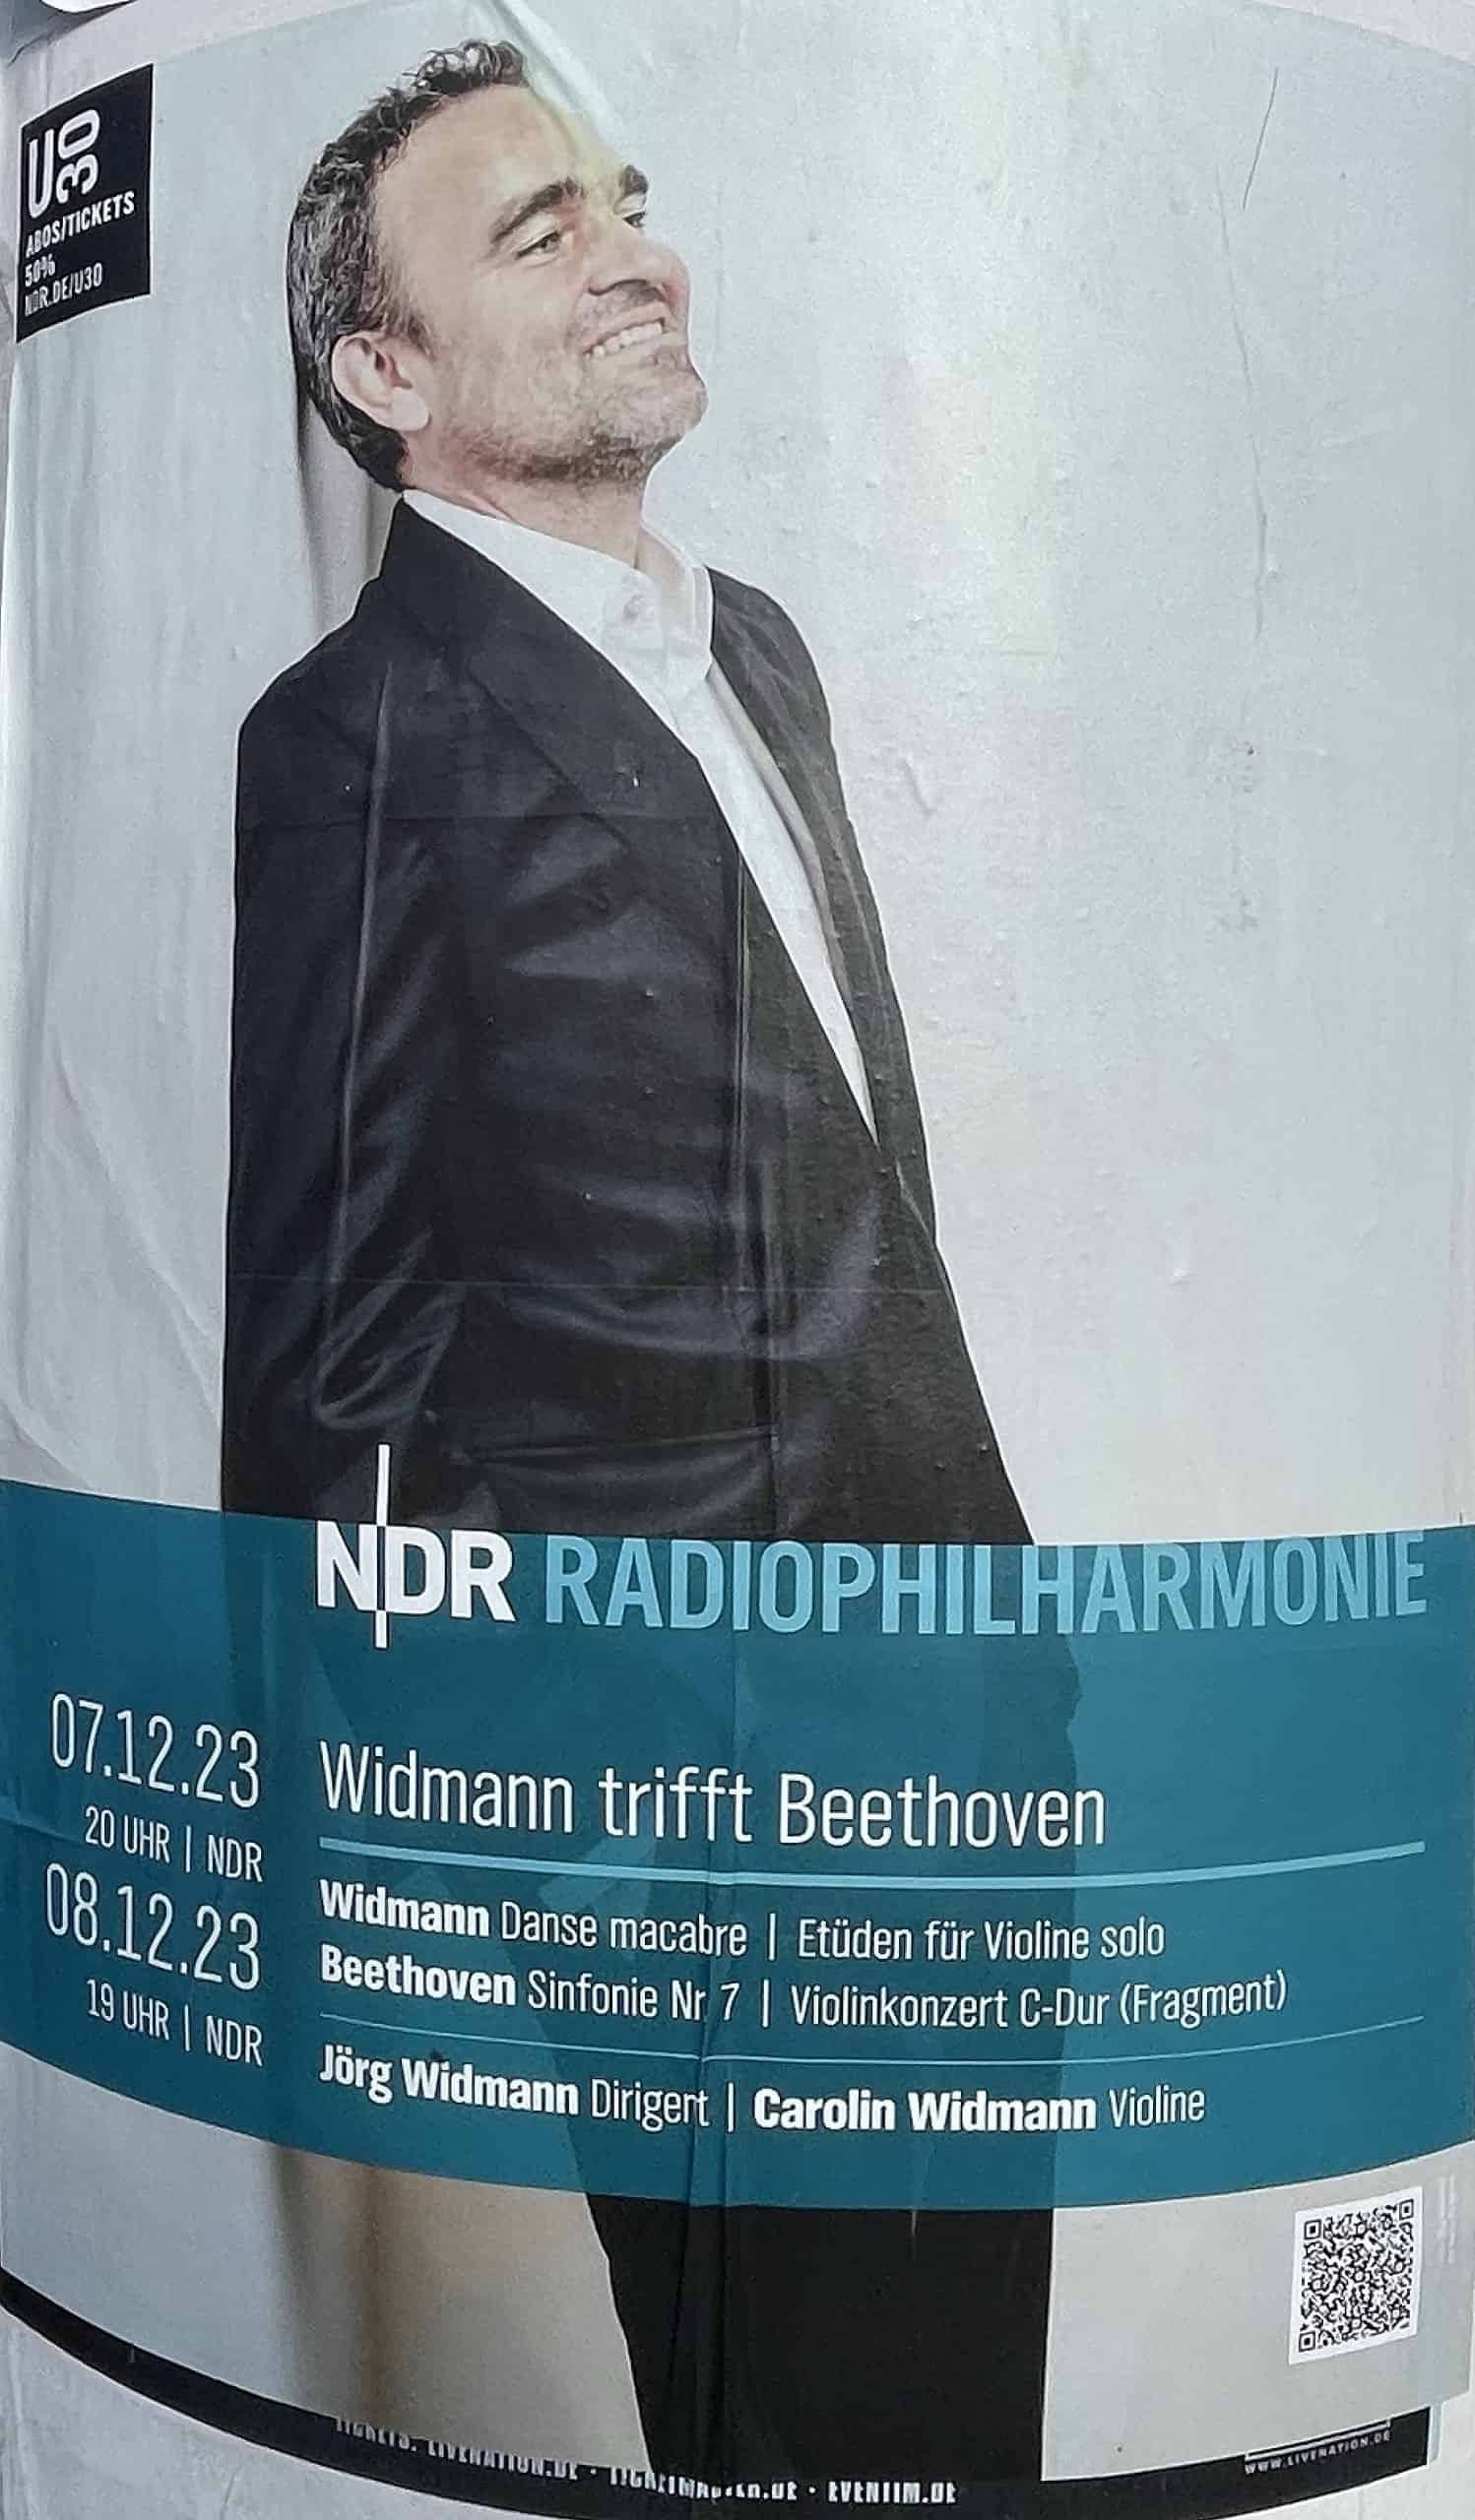 NDR RADIOPHILHARMONIE: Widmann trifft Beethoven